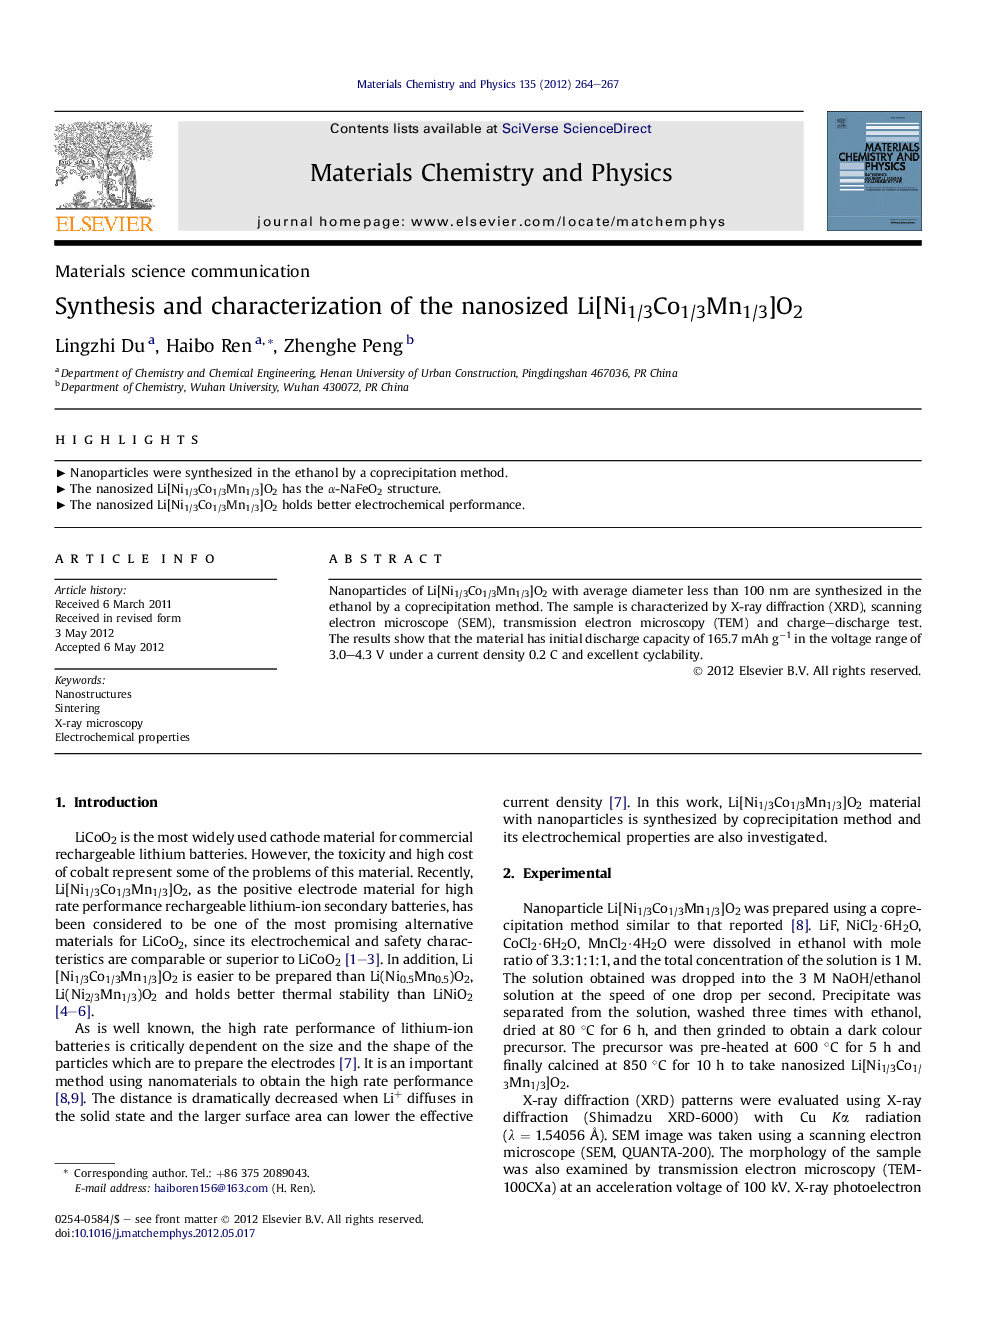 Synthesis and characterization of the nanosized Li[Ni1/3Co1/3Mn1/3]O2